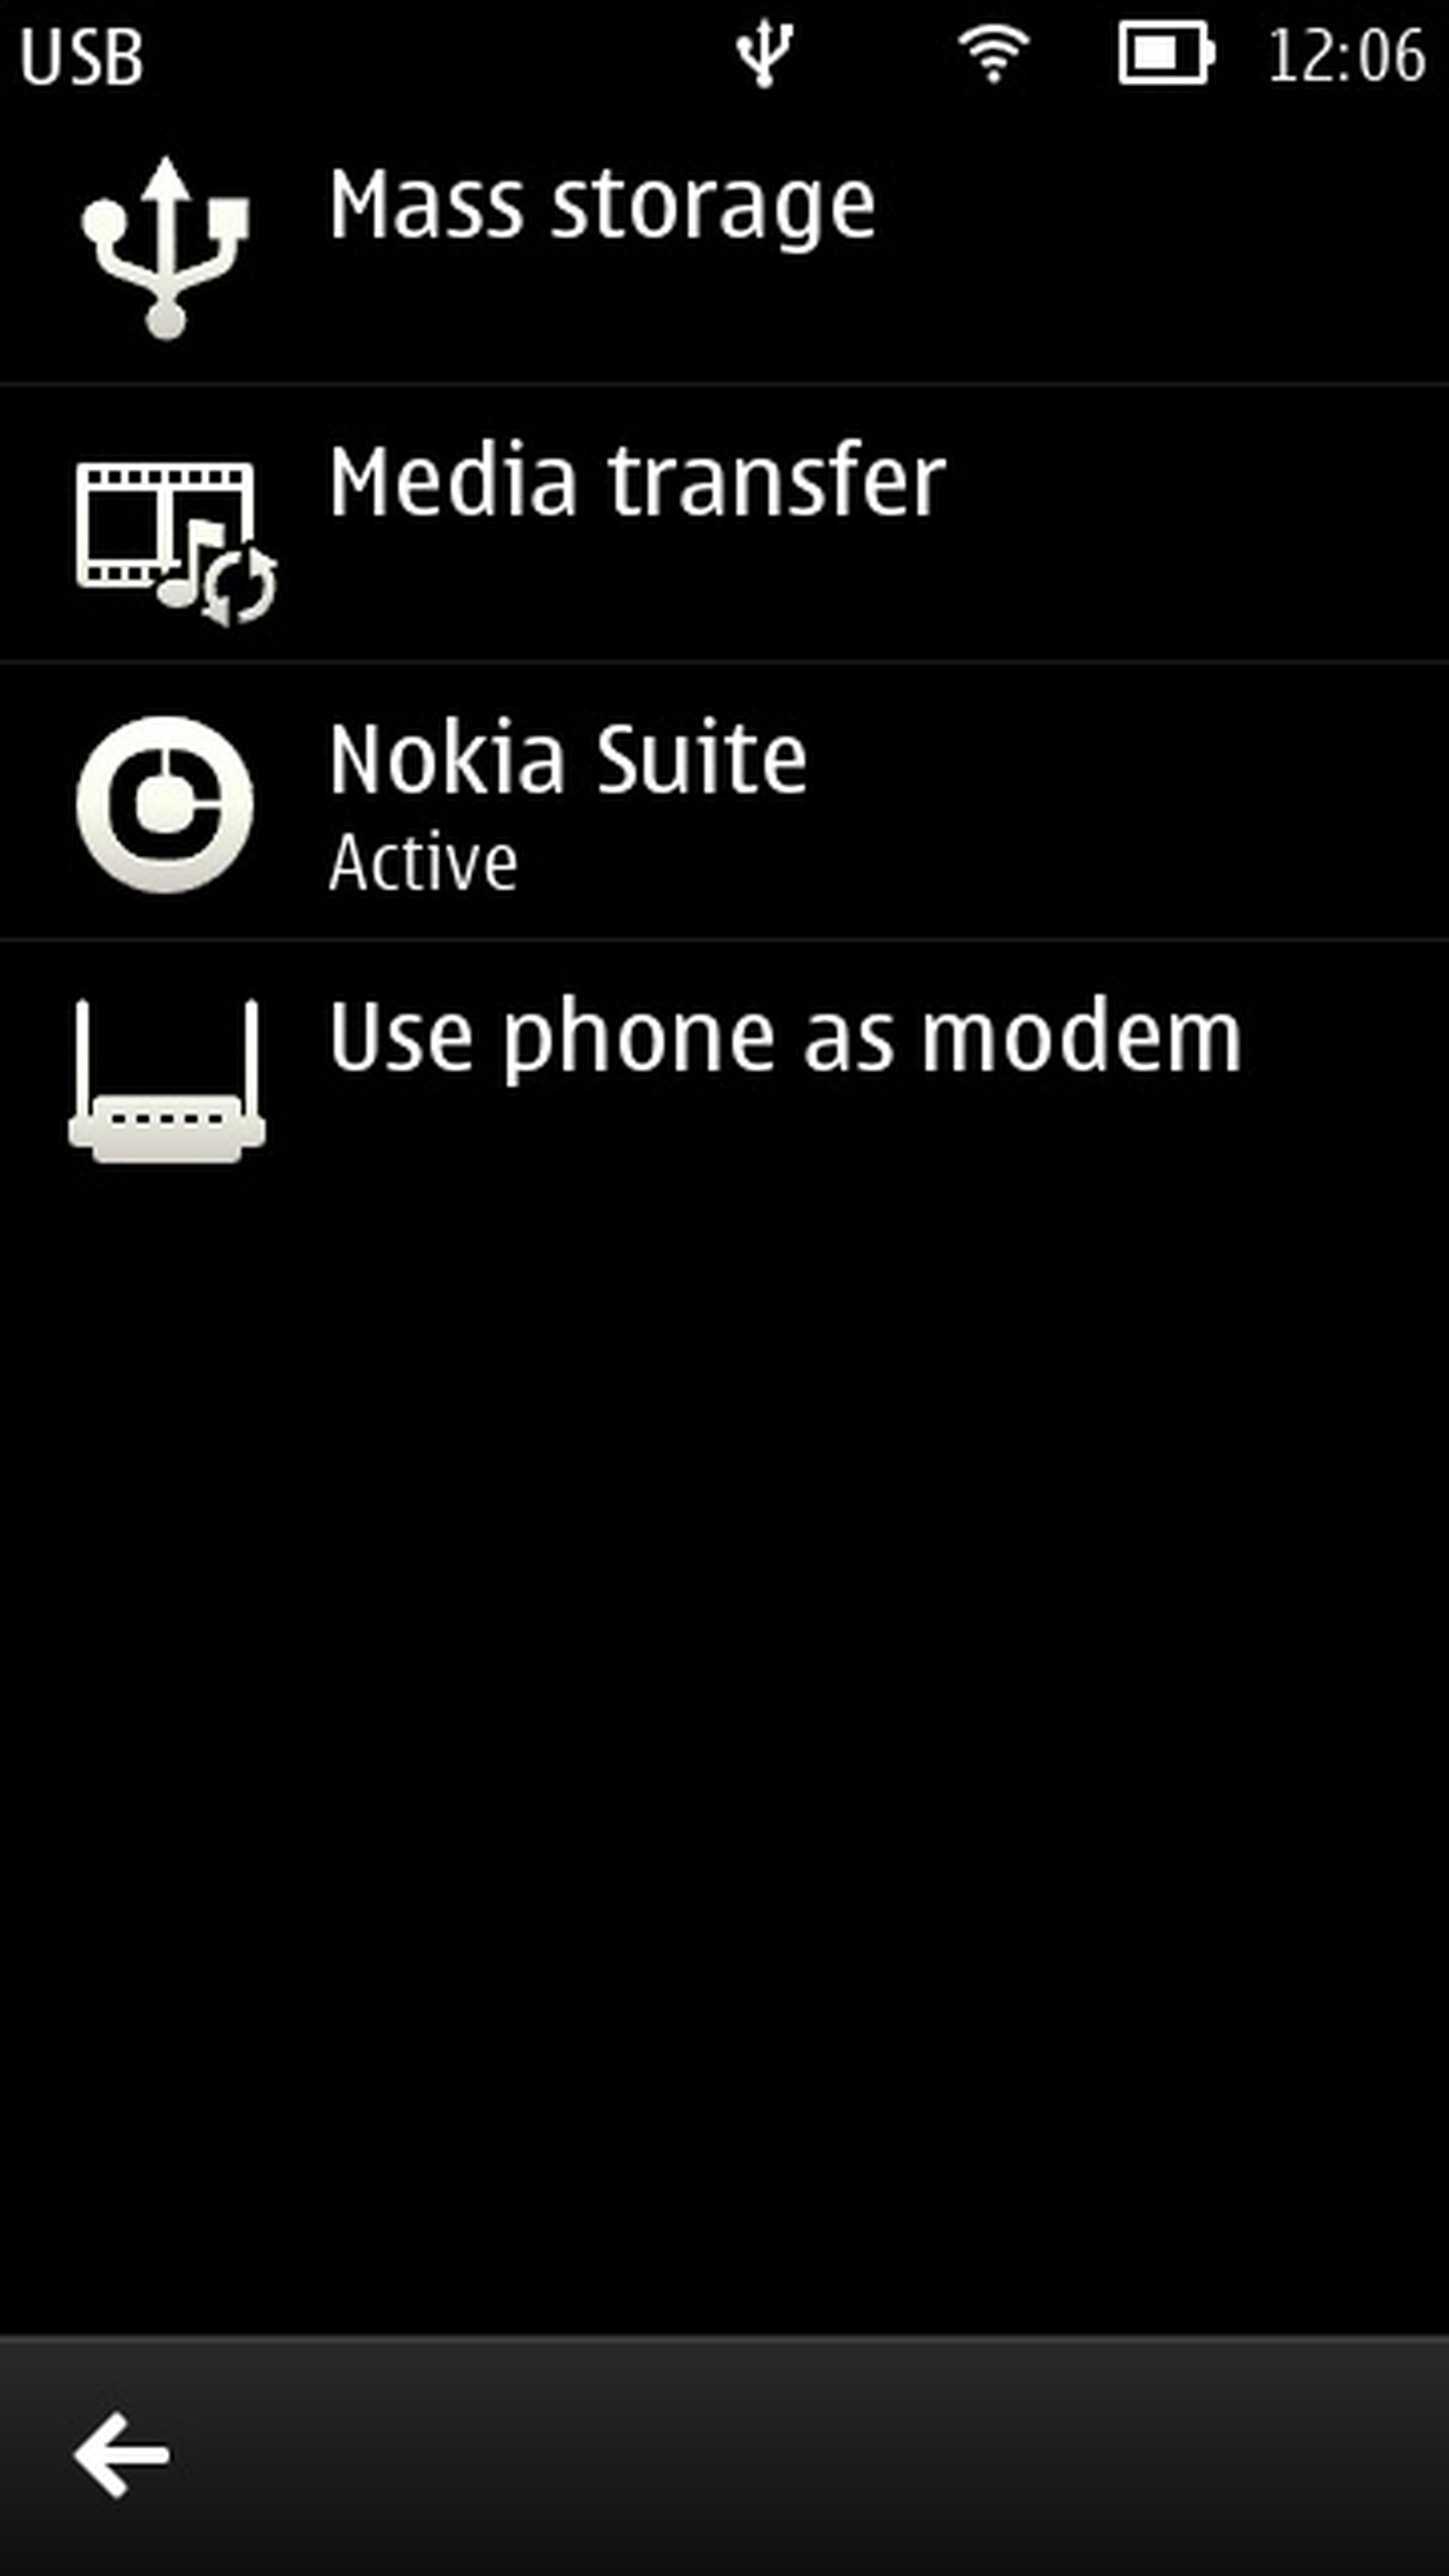 Nokia 808 PureView UI screenshots